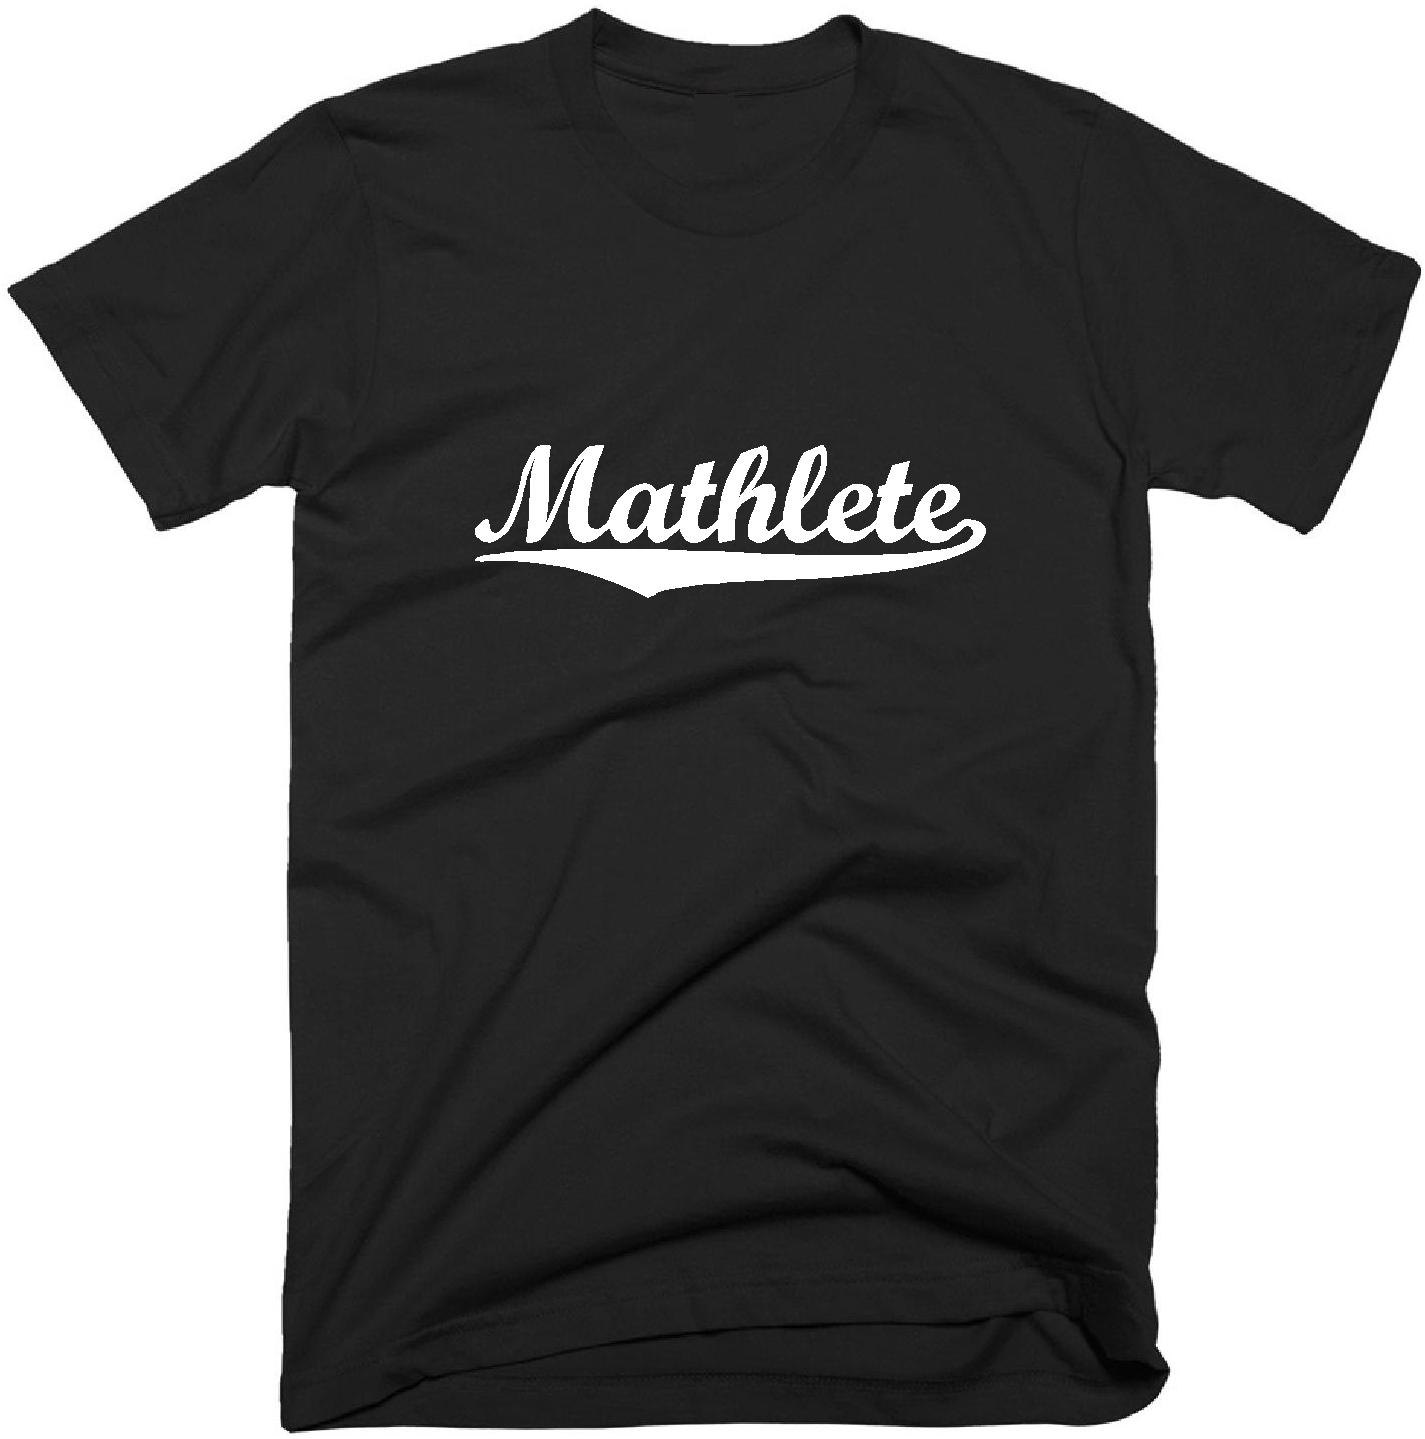 Mathlete T-shirt